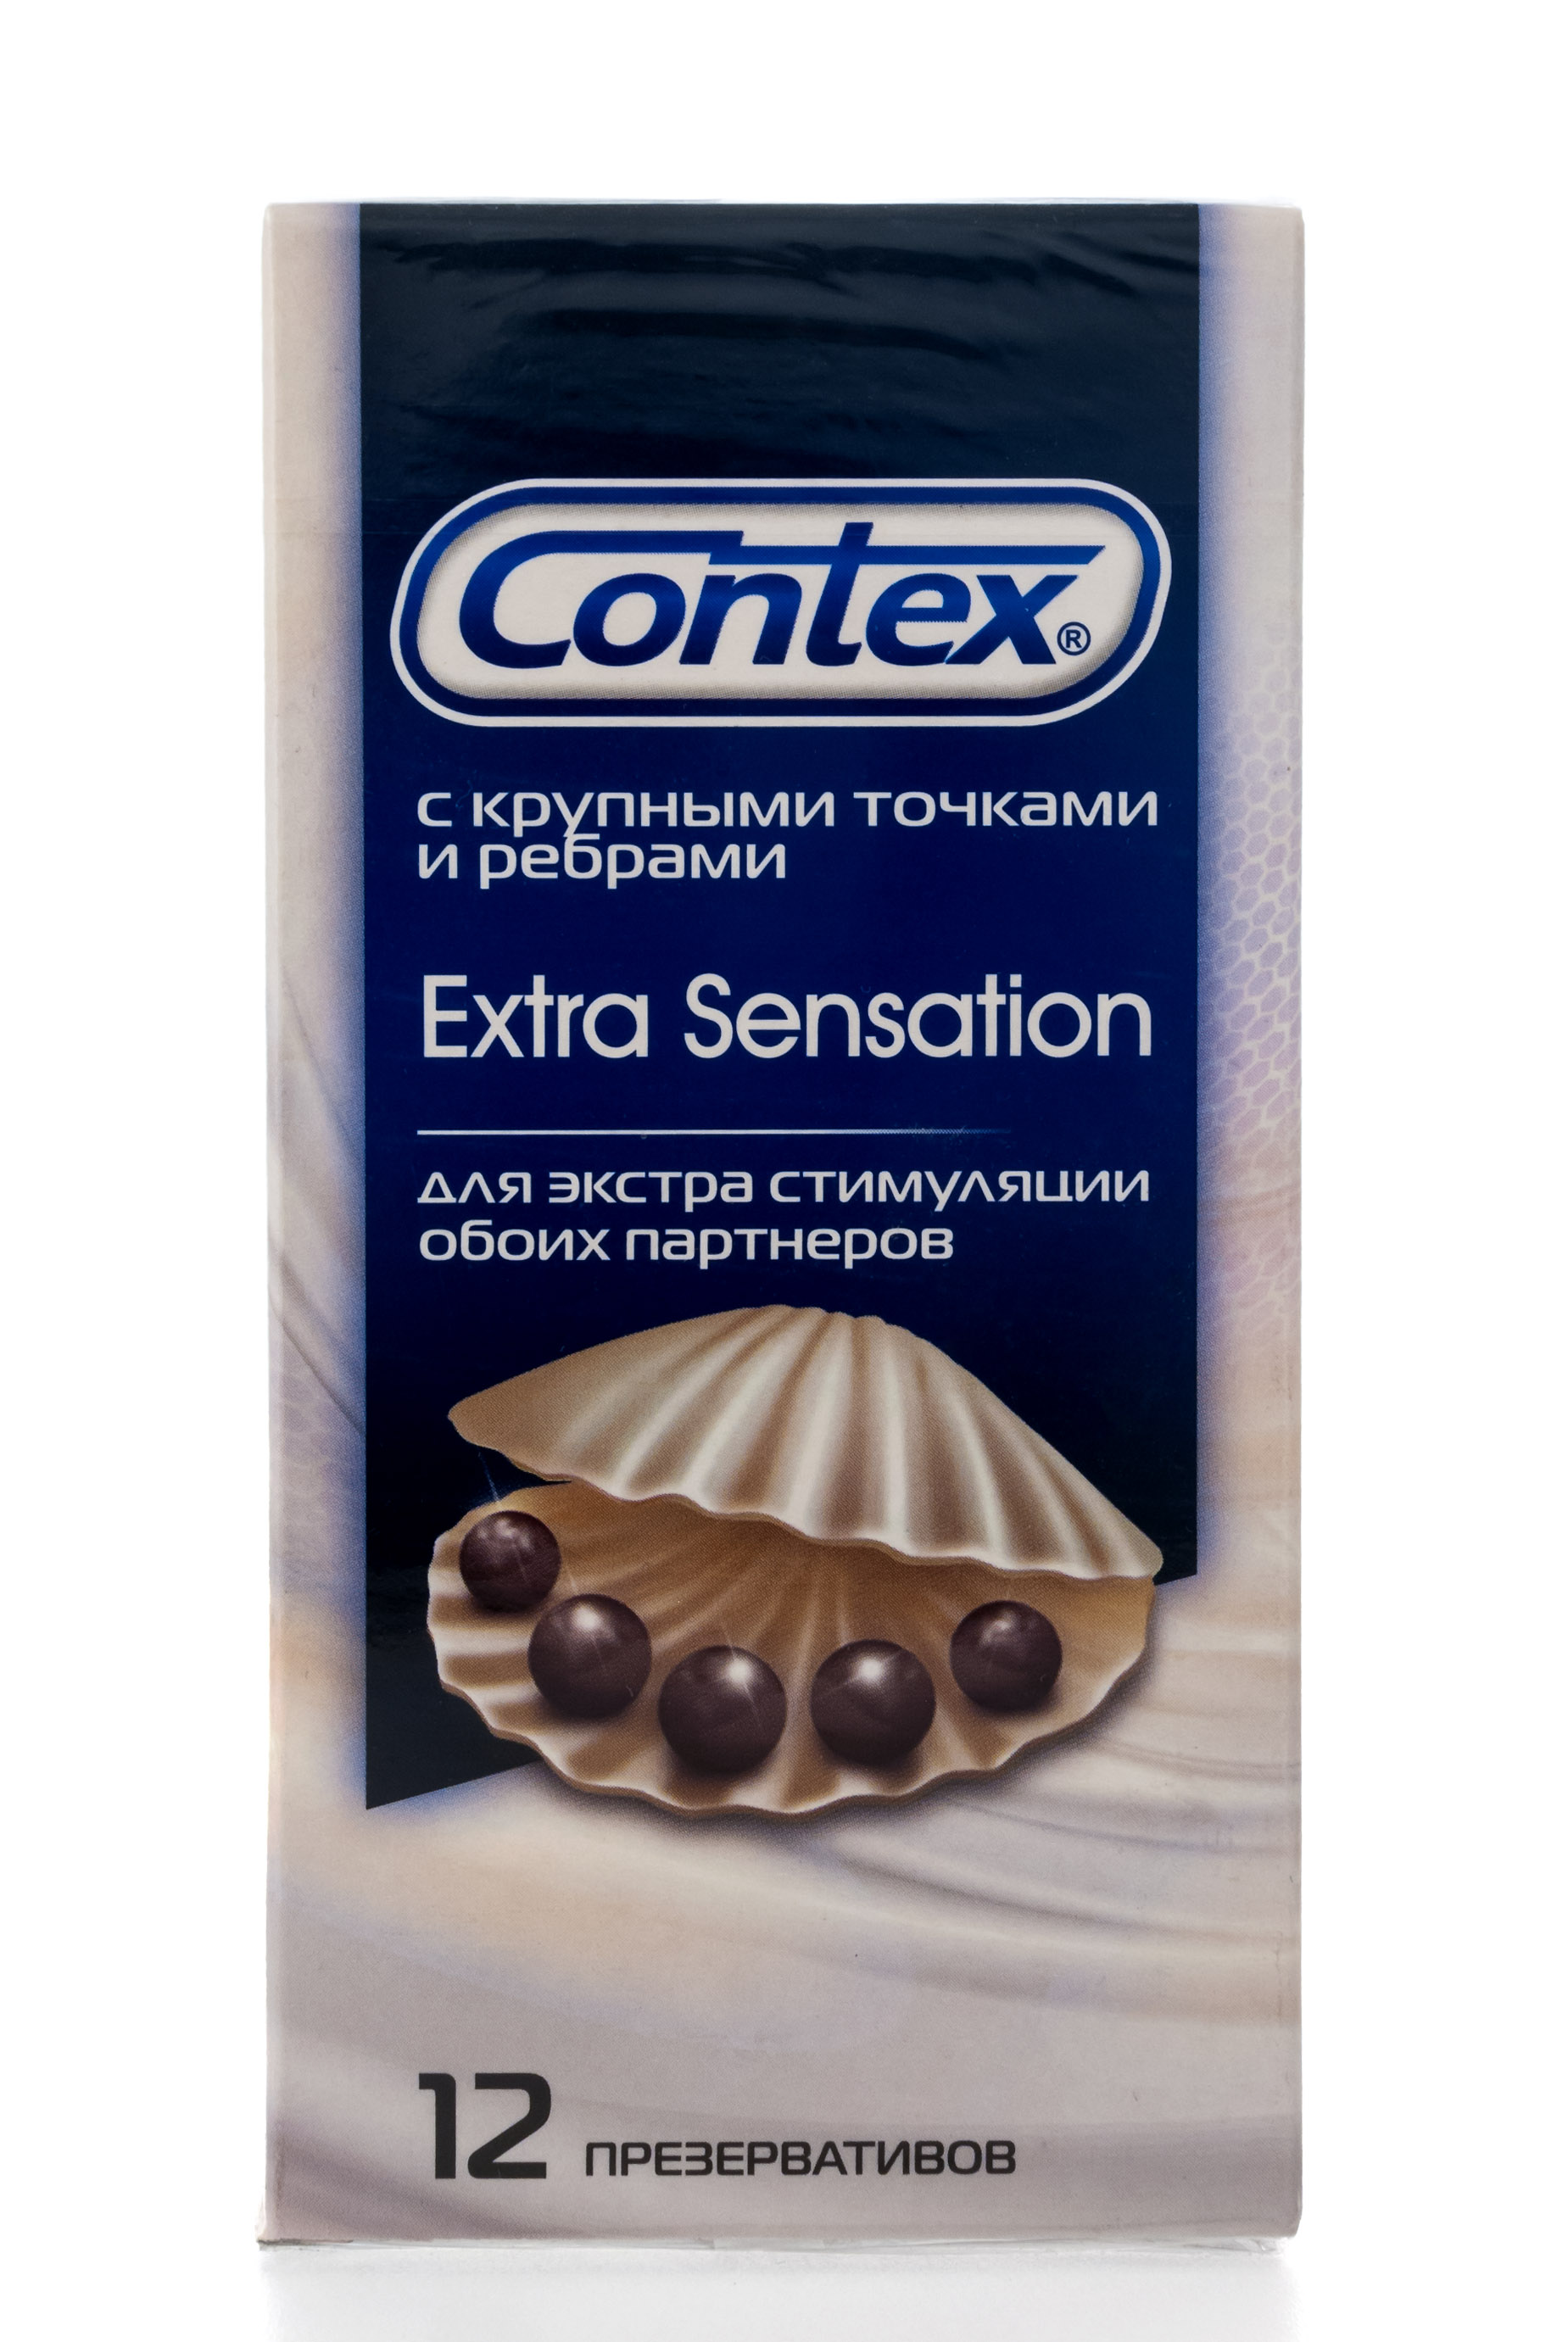 Contex Презервативы EXTRA SENSATION №12 (Contex, Презервативы)